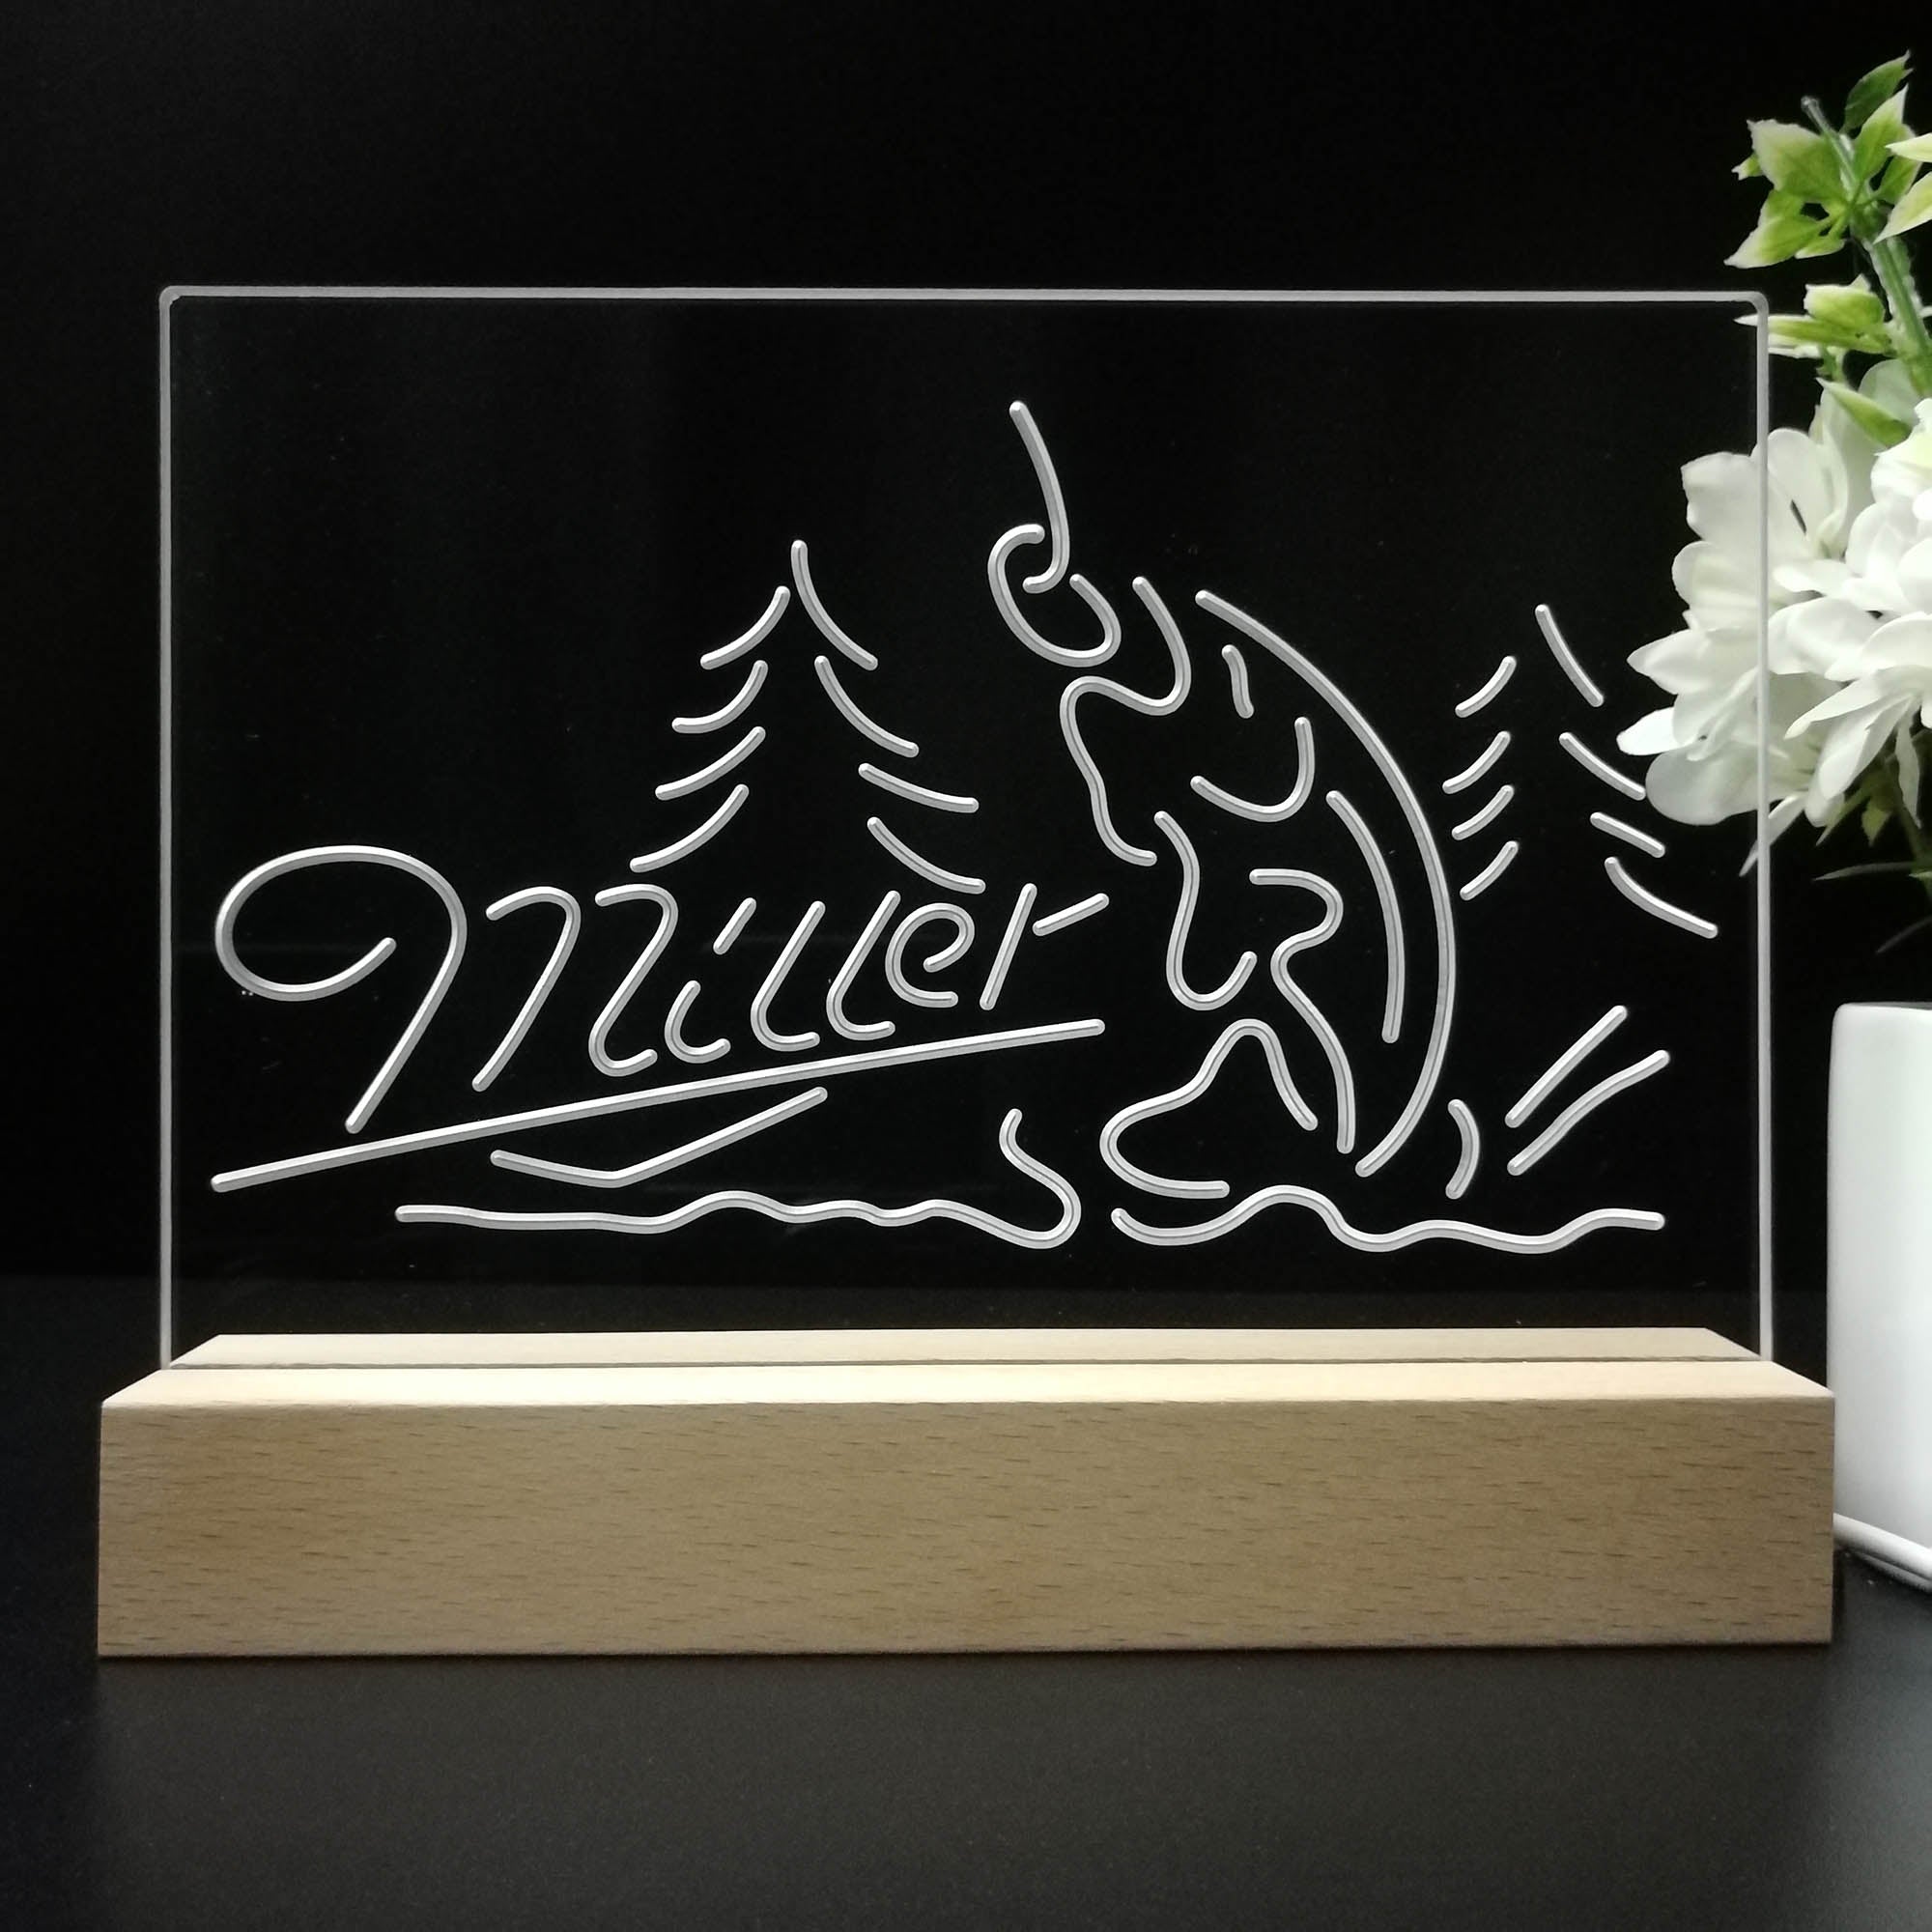 Miller Fish Fishing Night Light 3D Illusion Lamp Home Bar Decor